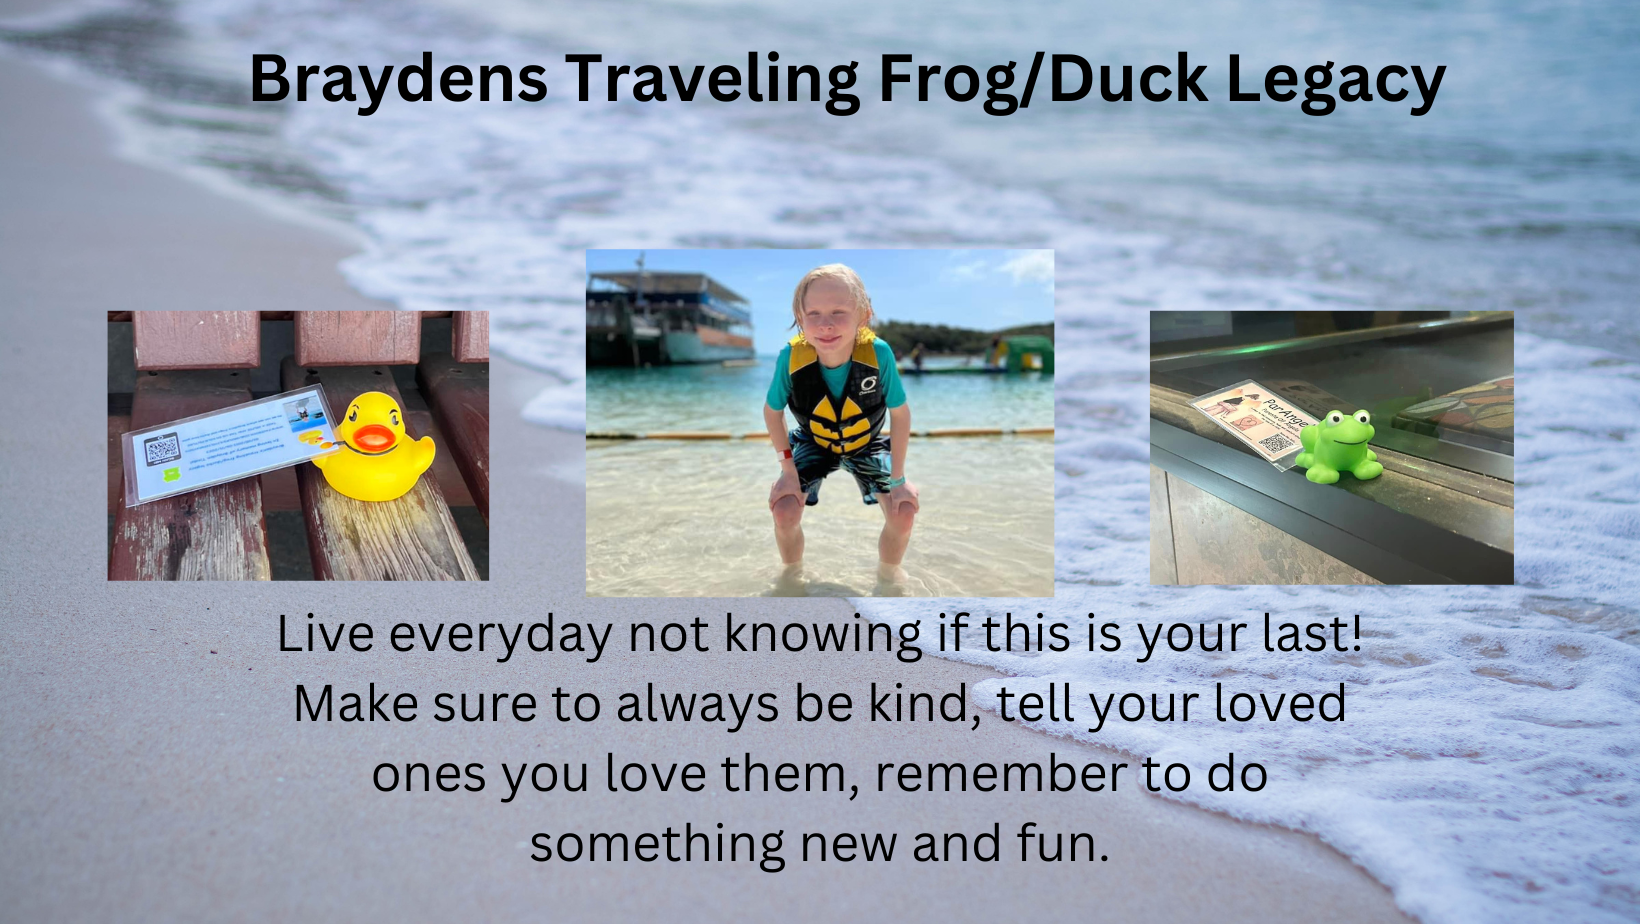 Braydens Traveling Frog/Duck Legacy